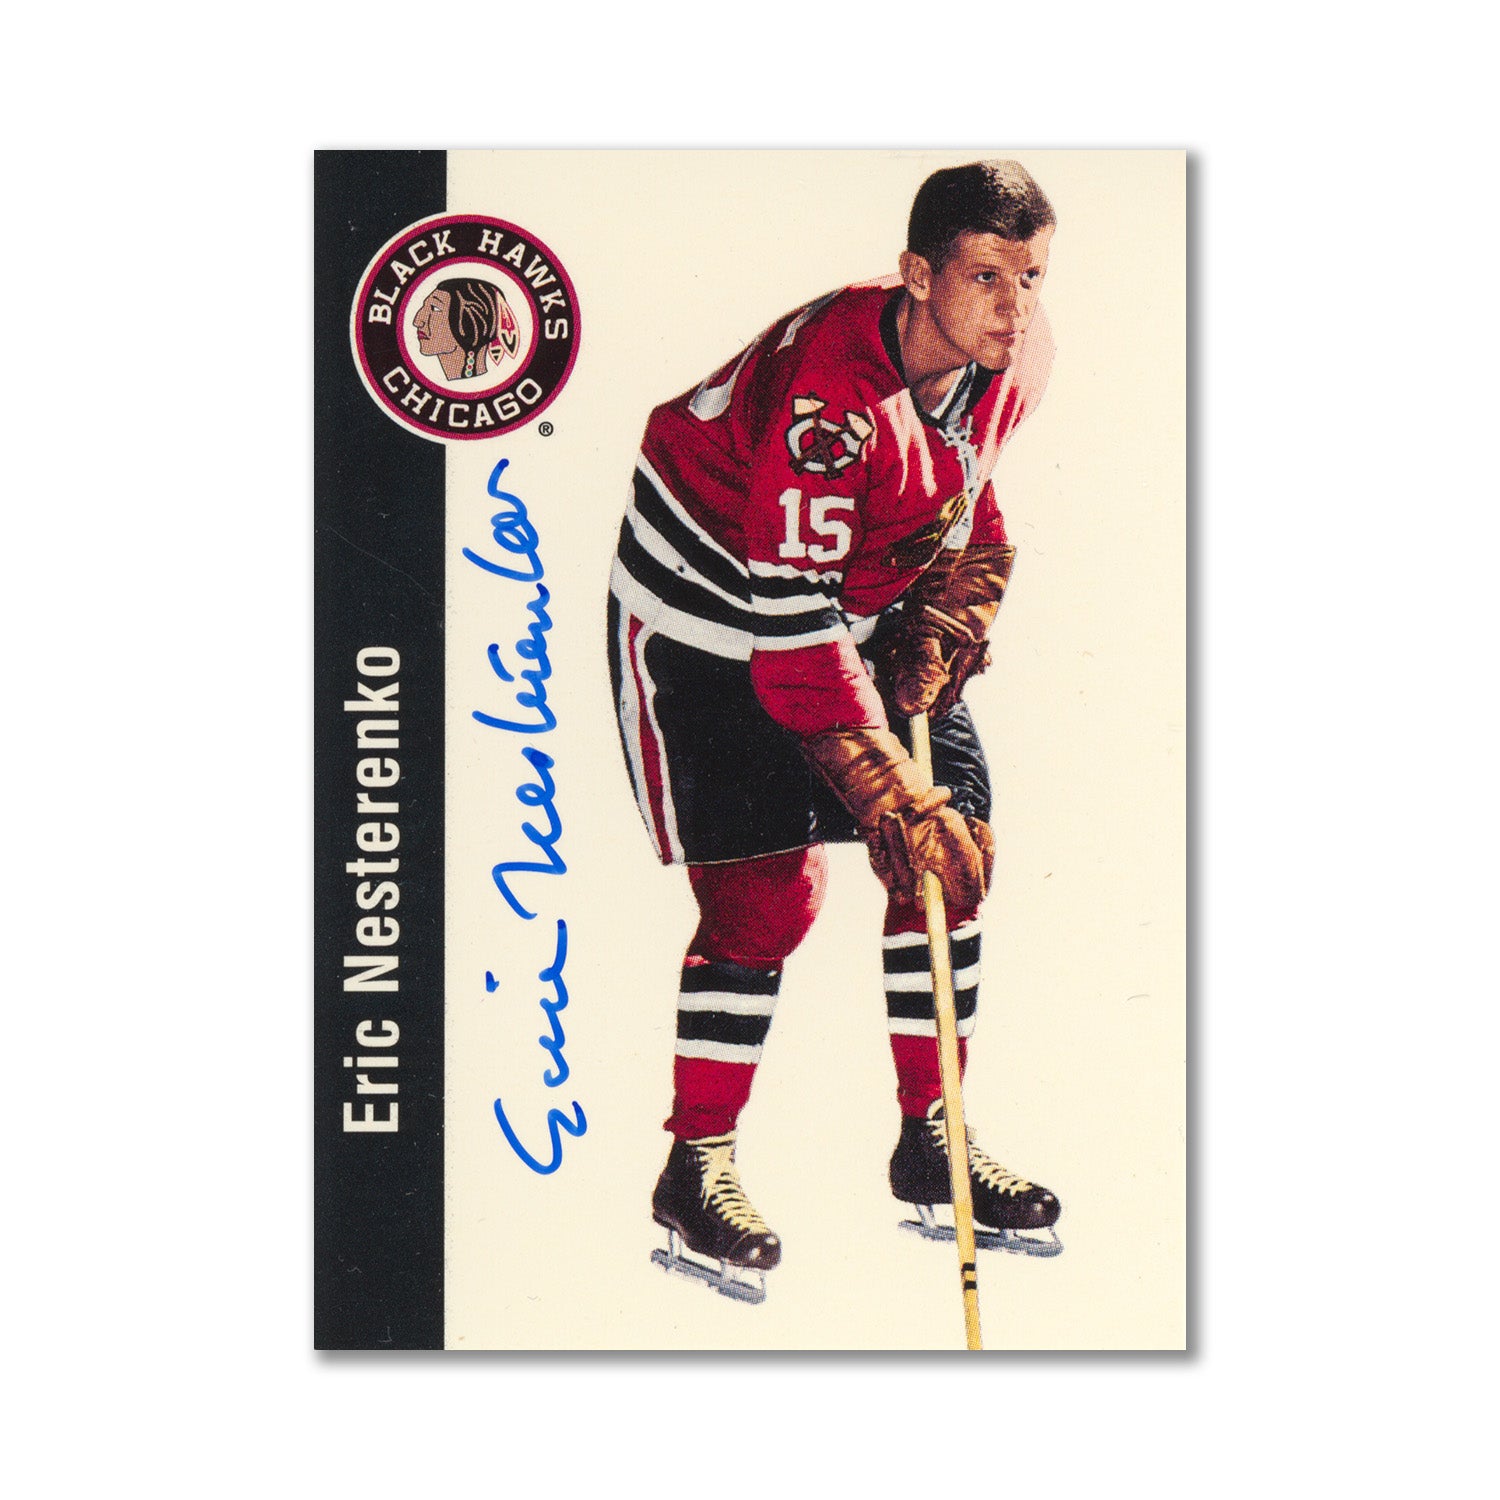 Autographed 1994 Parkhurst Missing Link #39 Eric Nesterenko Hockey Card